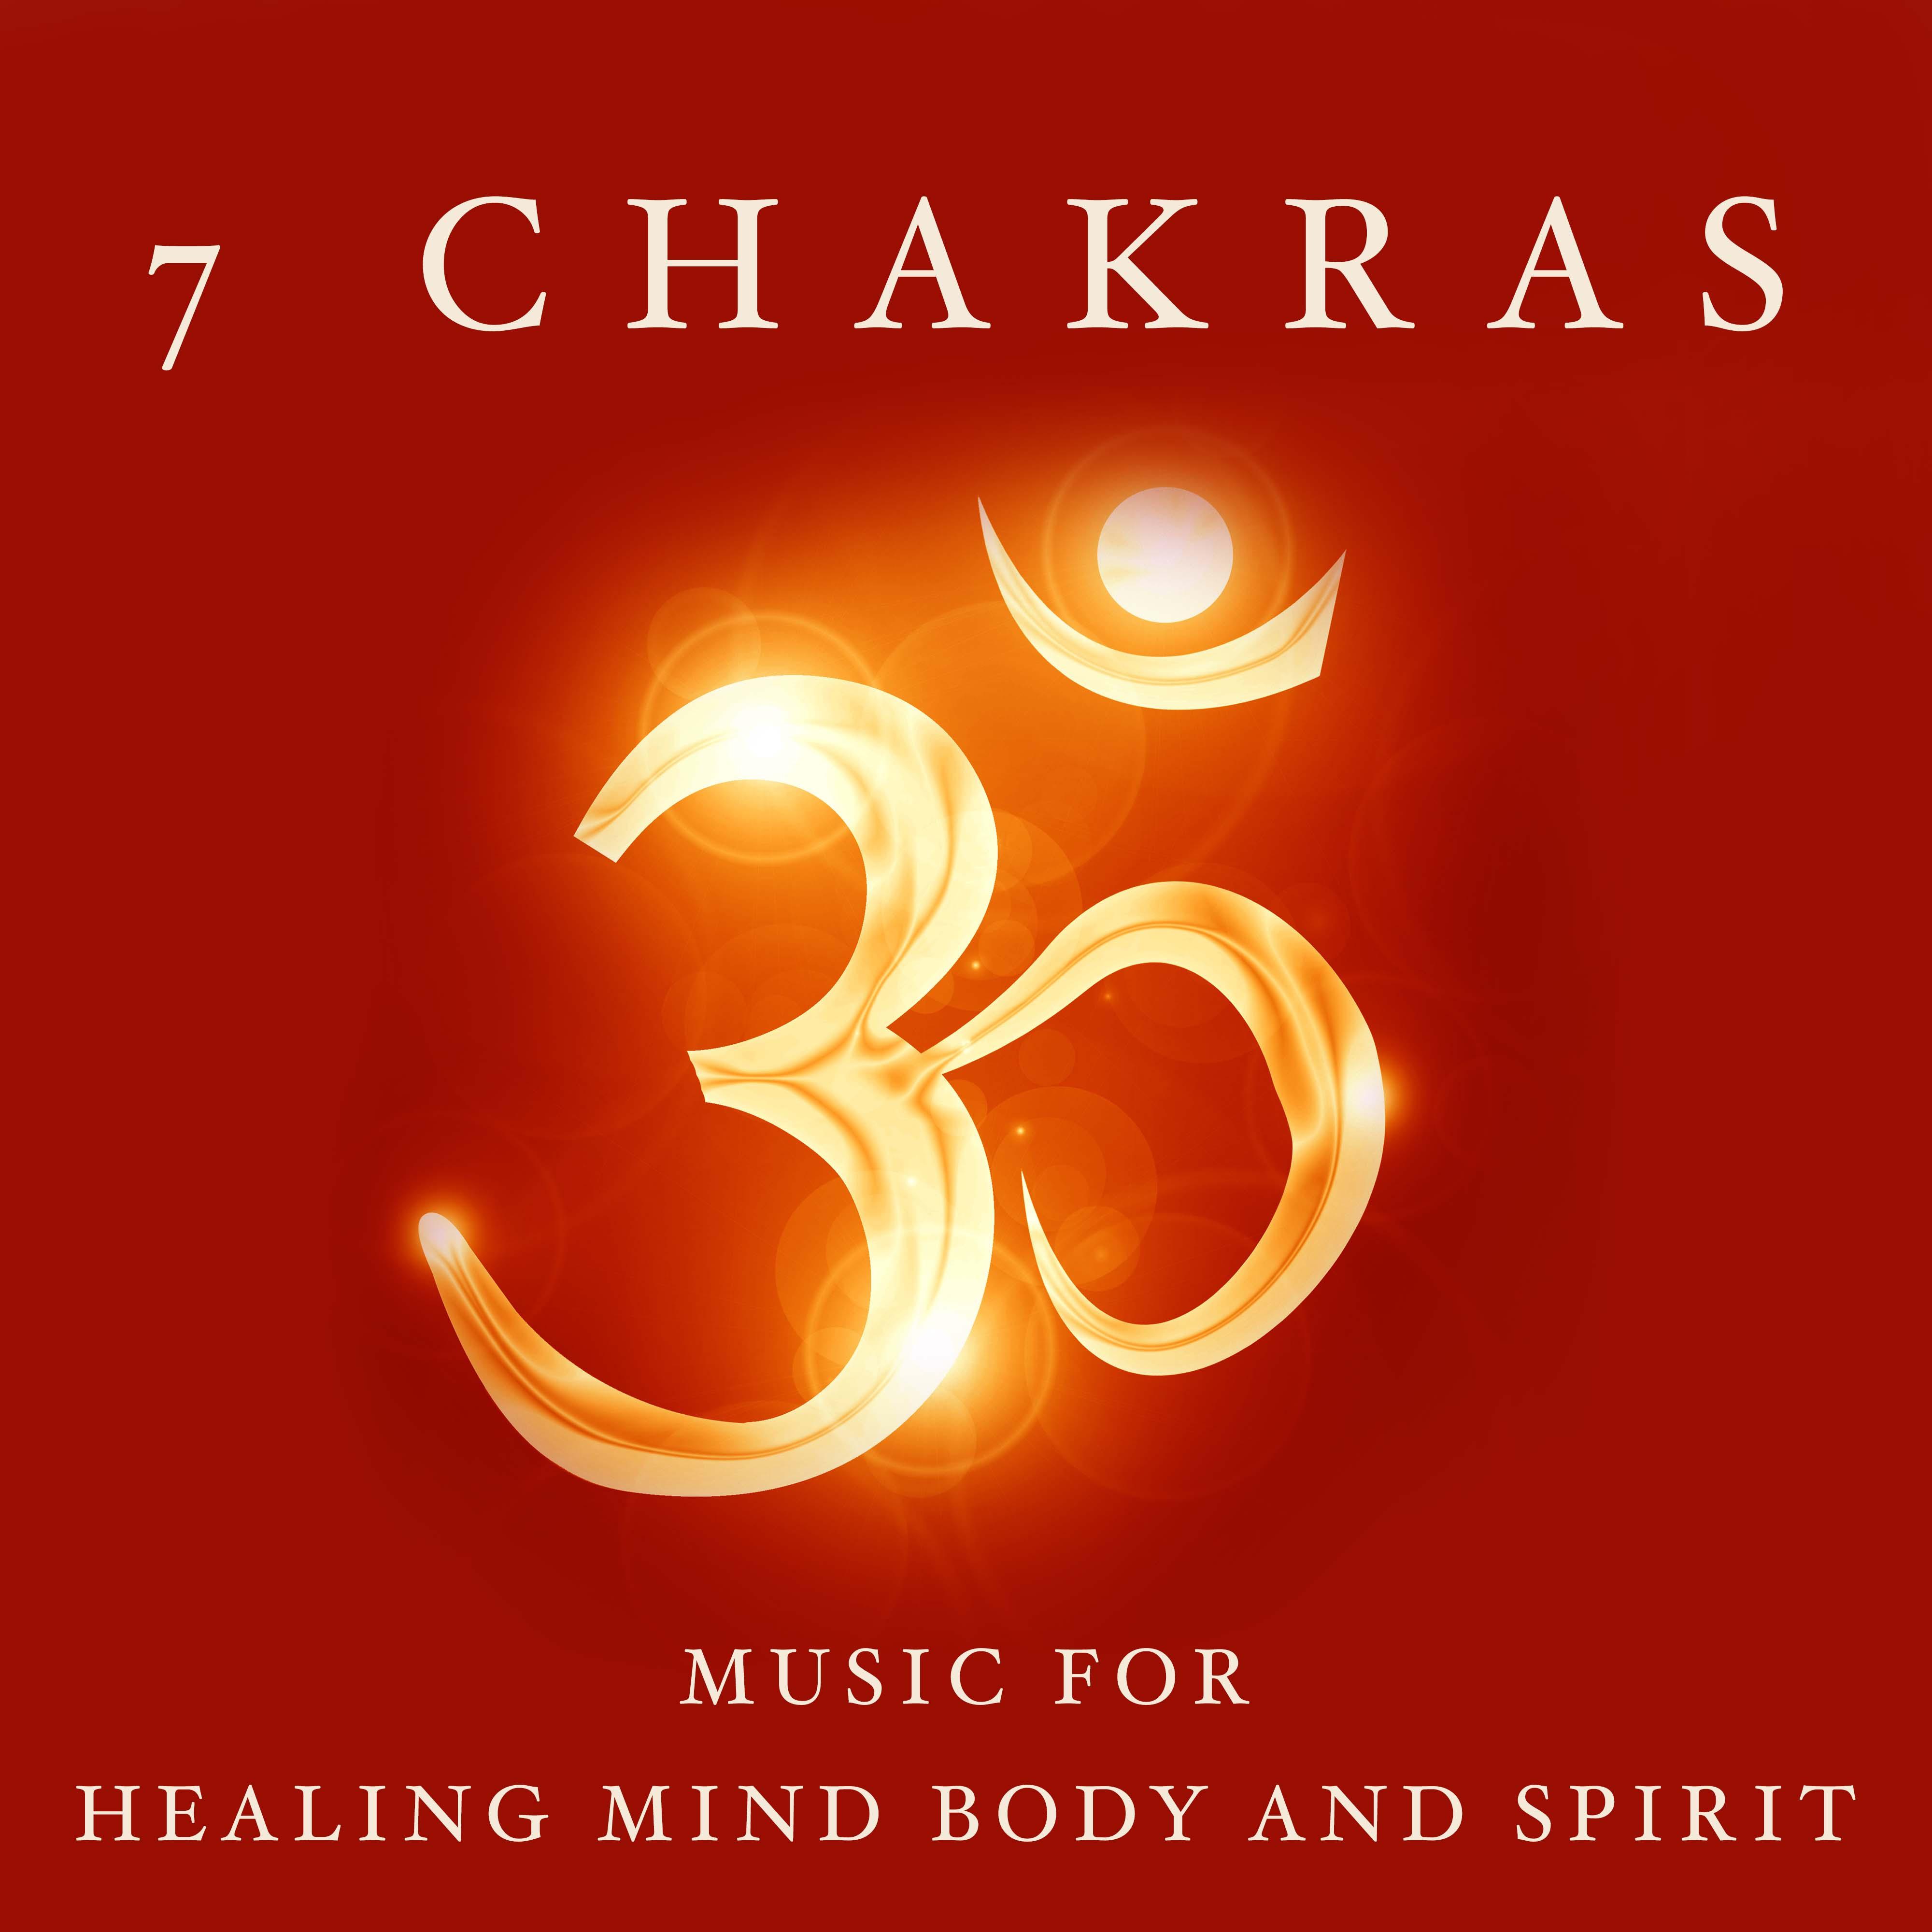 7 Chakras - Music for Healing Mind Body and Spirit